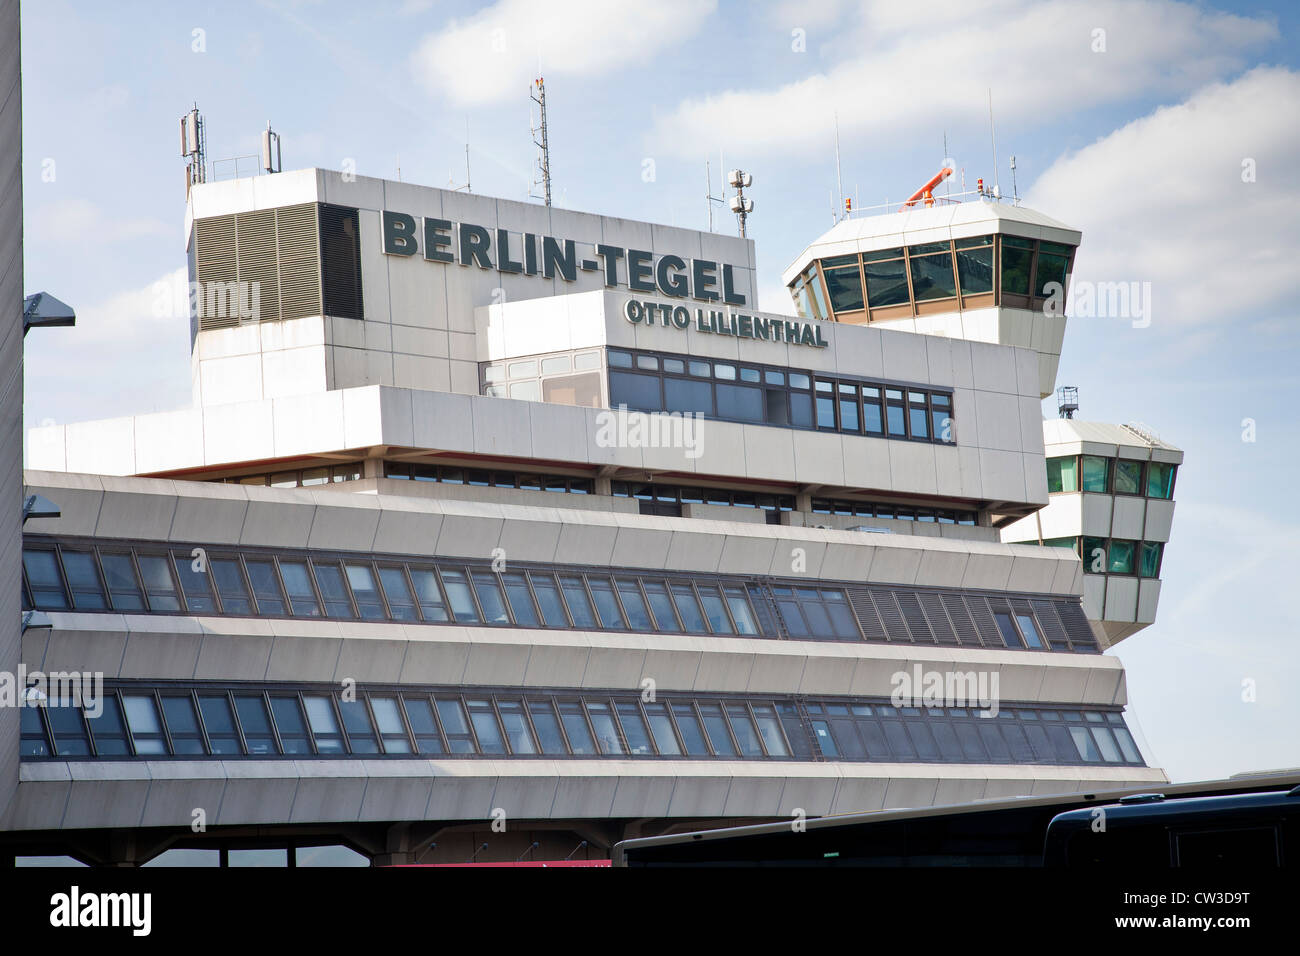 Germany, Berlin Tegel International airport Stock Photo